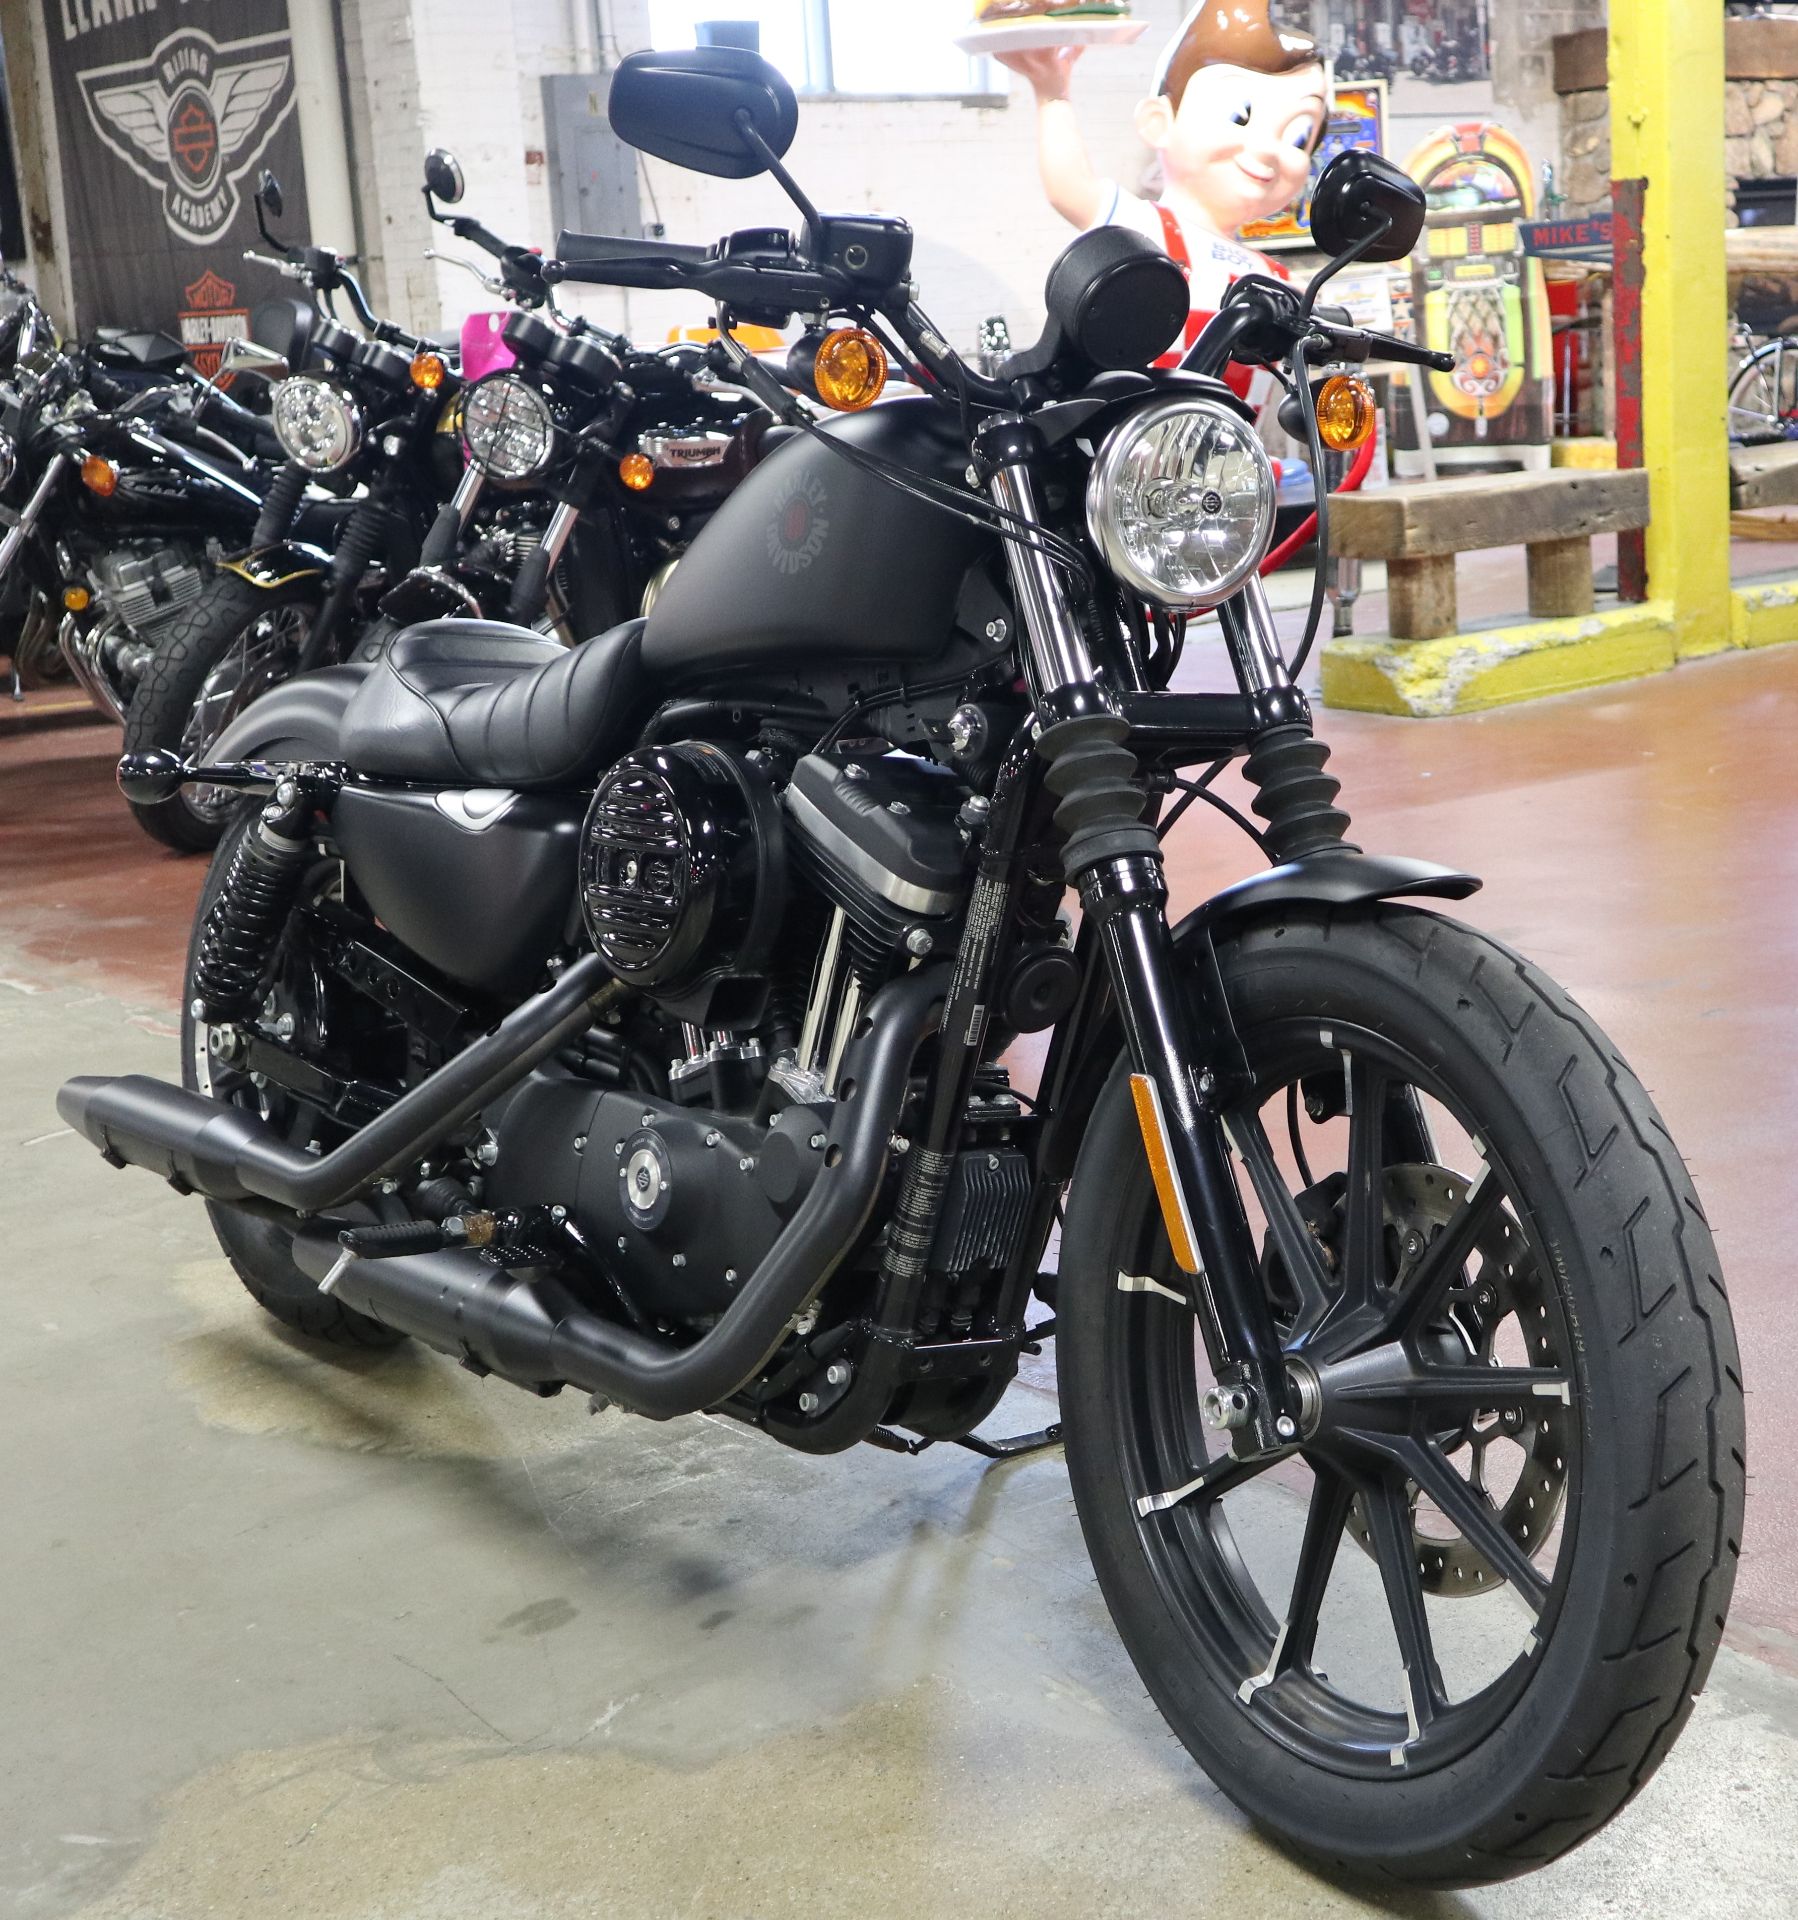 2022 Harley-Davidson Iron 883™ in New London, Connecticut - Photo 2